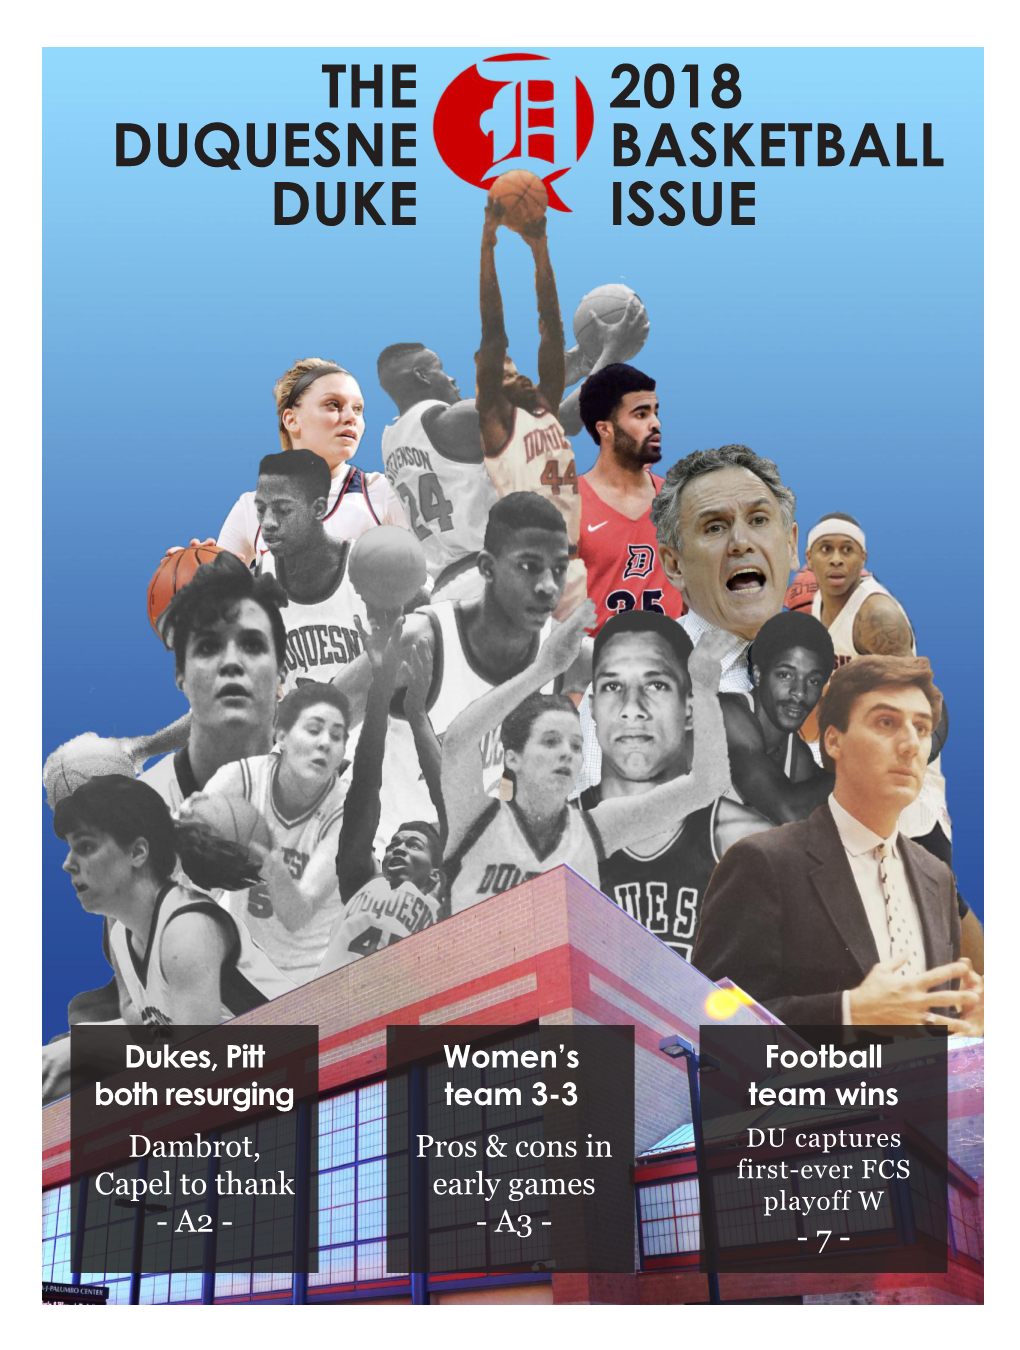 The Duquesne Duke 2018 Basketball Issue